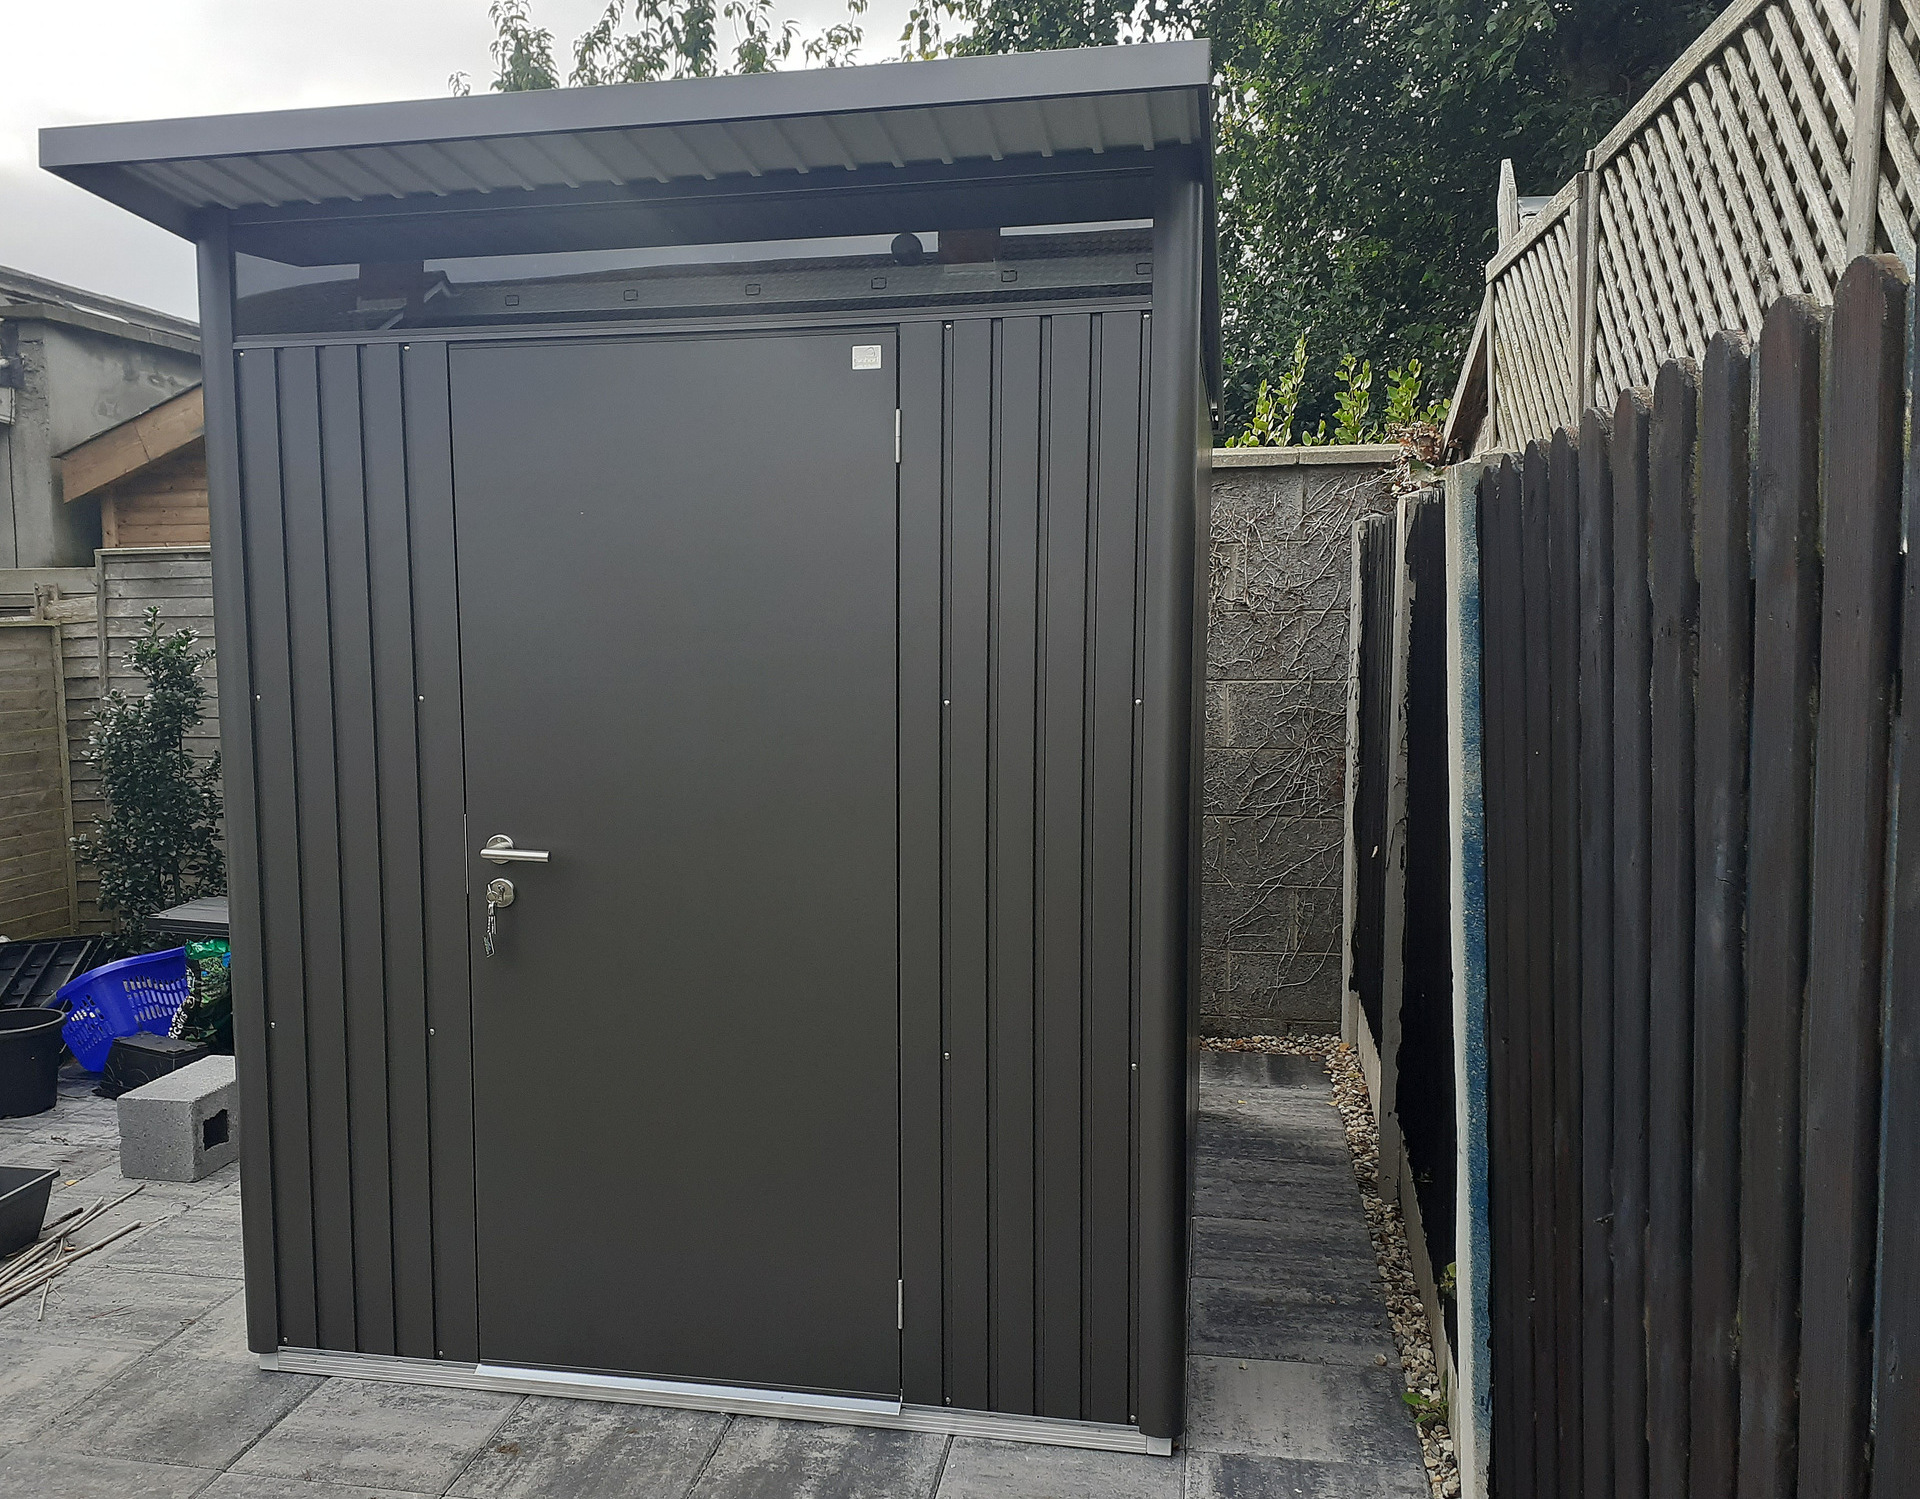 Biohort AvantGarde A2 in metallic dark grey, supplied + fitted in Baldoyle, Dublin  | Pay less for Biohort at Owen Chubb GardenStudio, Tel 087-2306 128